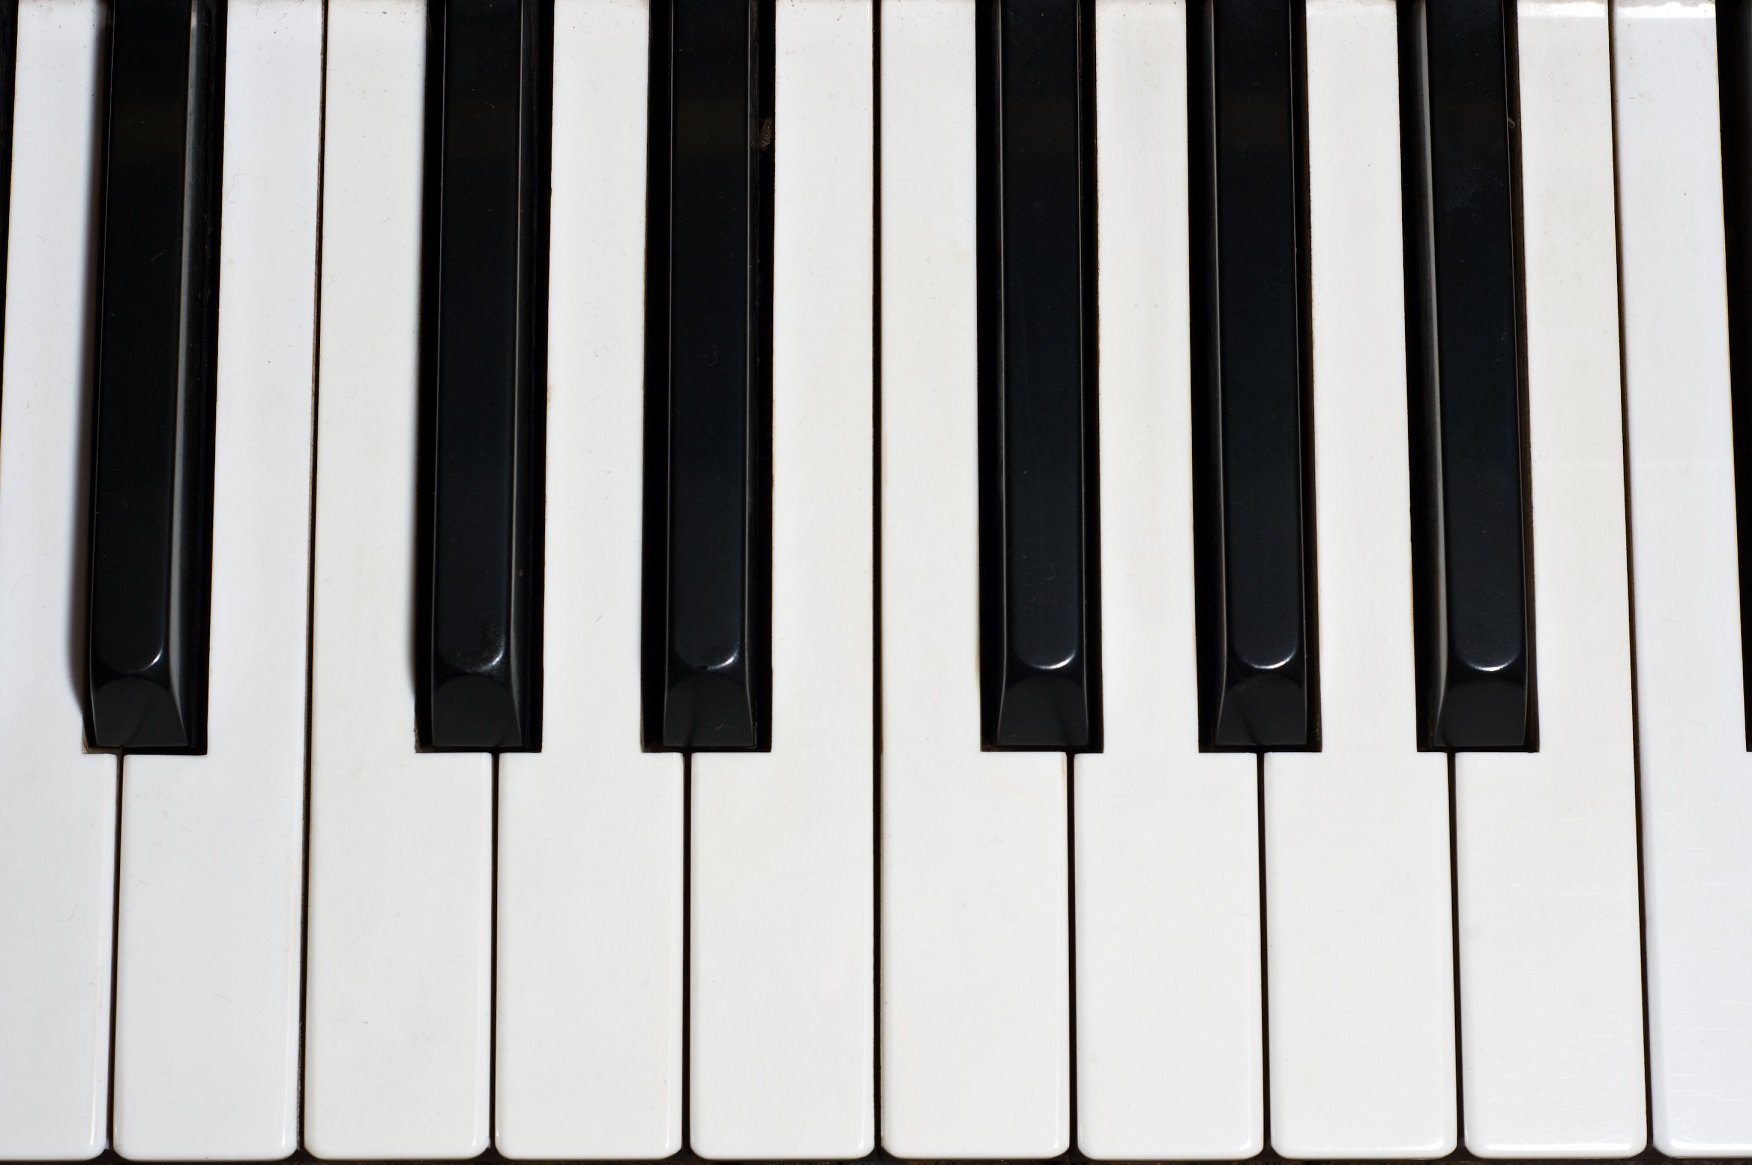 Фортепиано белые клавиши. Клавиатура пианино 1к1. Пиано складная клавиатура. Клавиатура рояля. Клавиши пианино.